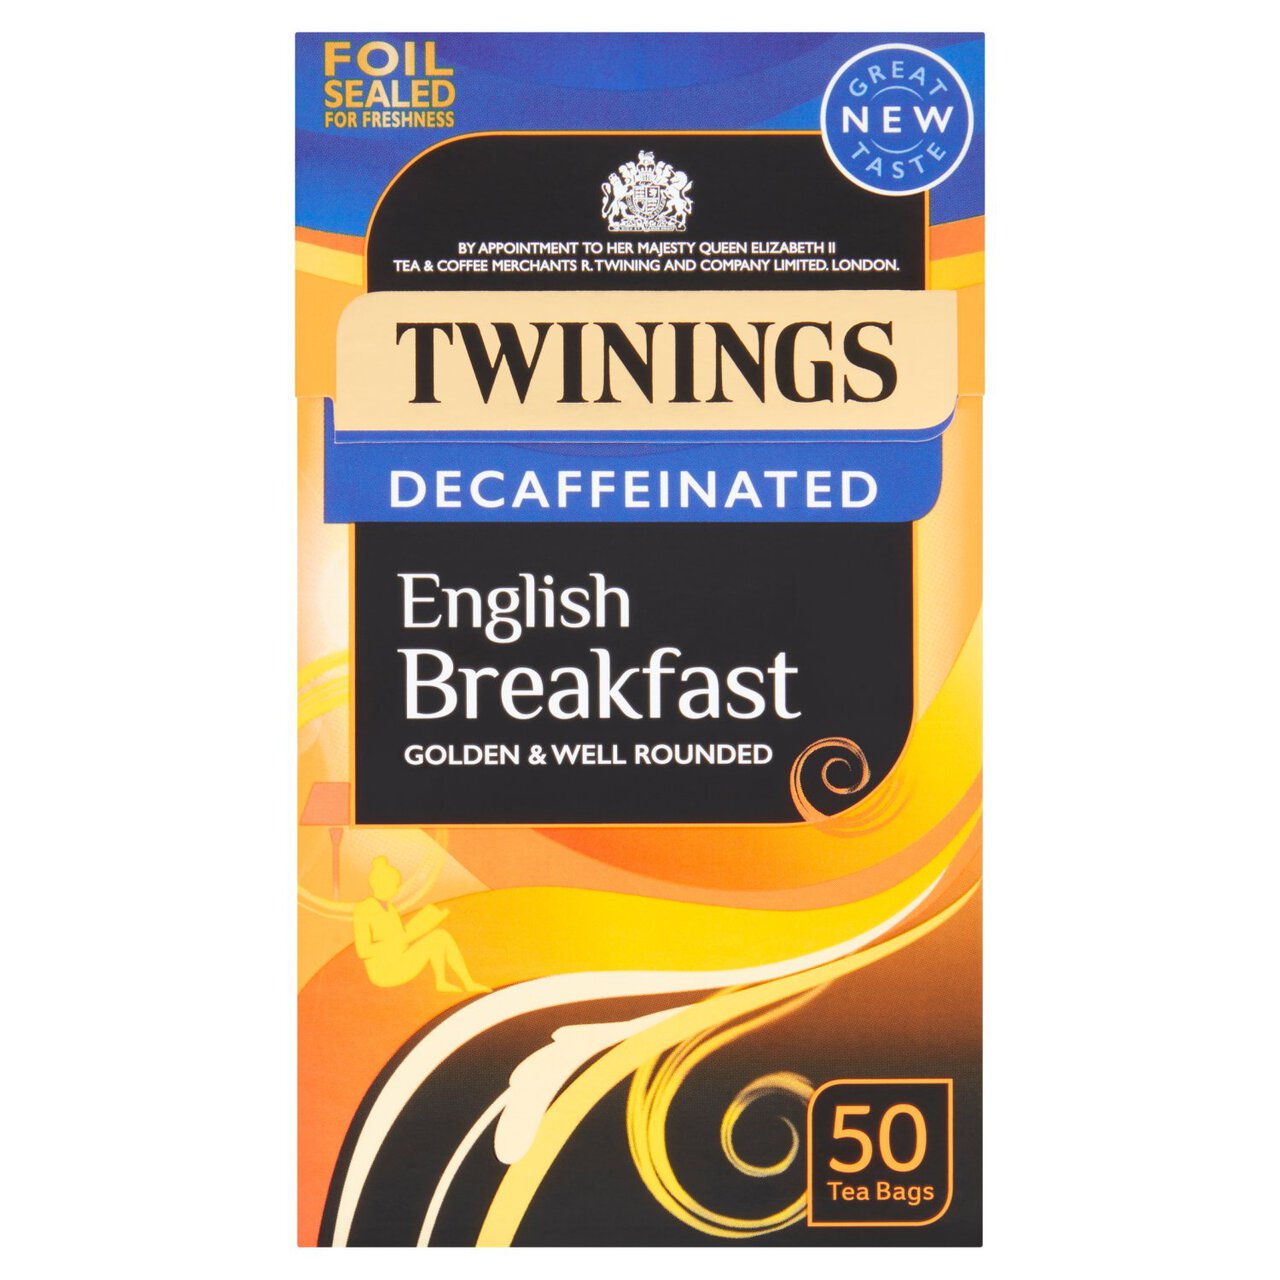 Twinings Decaffeinated English Breakfast Tea 50 per pack